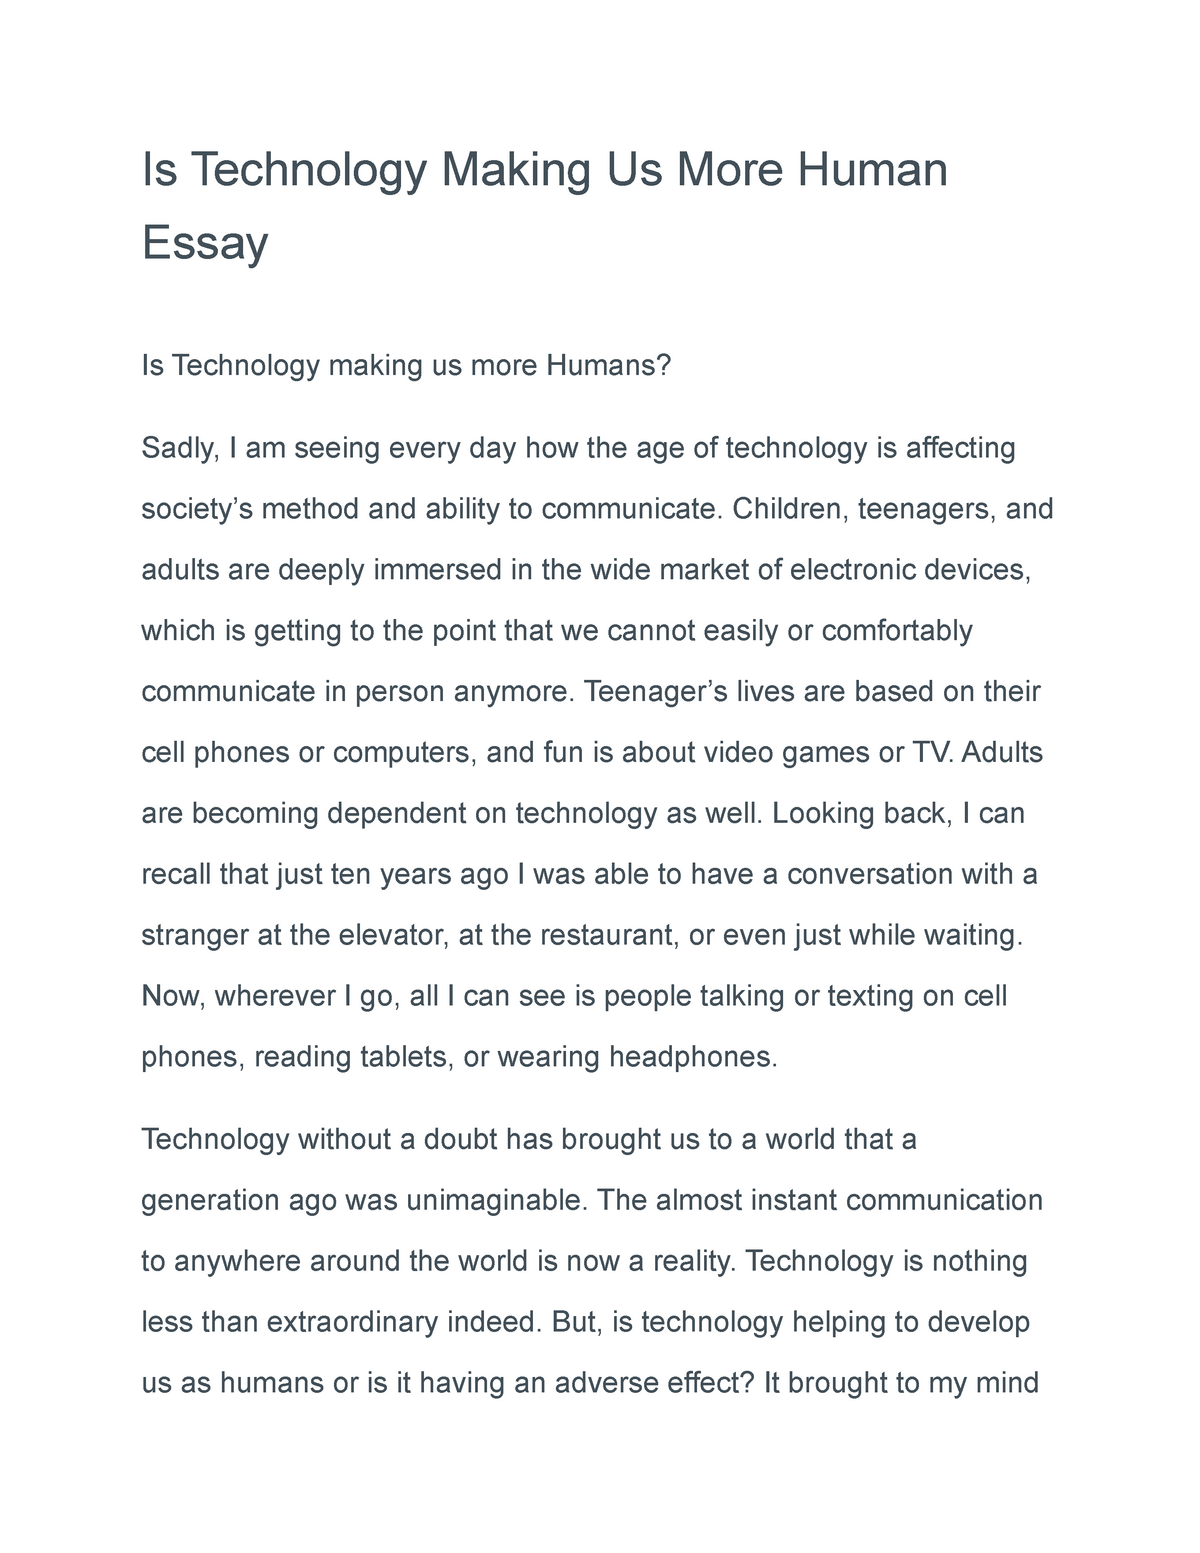 technology dependence essay